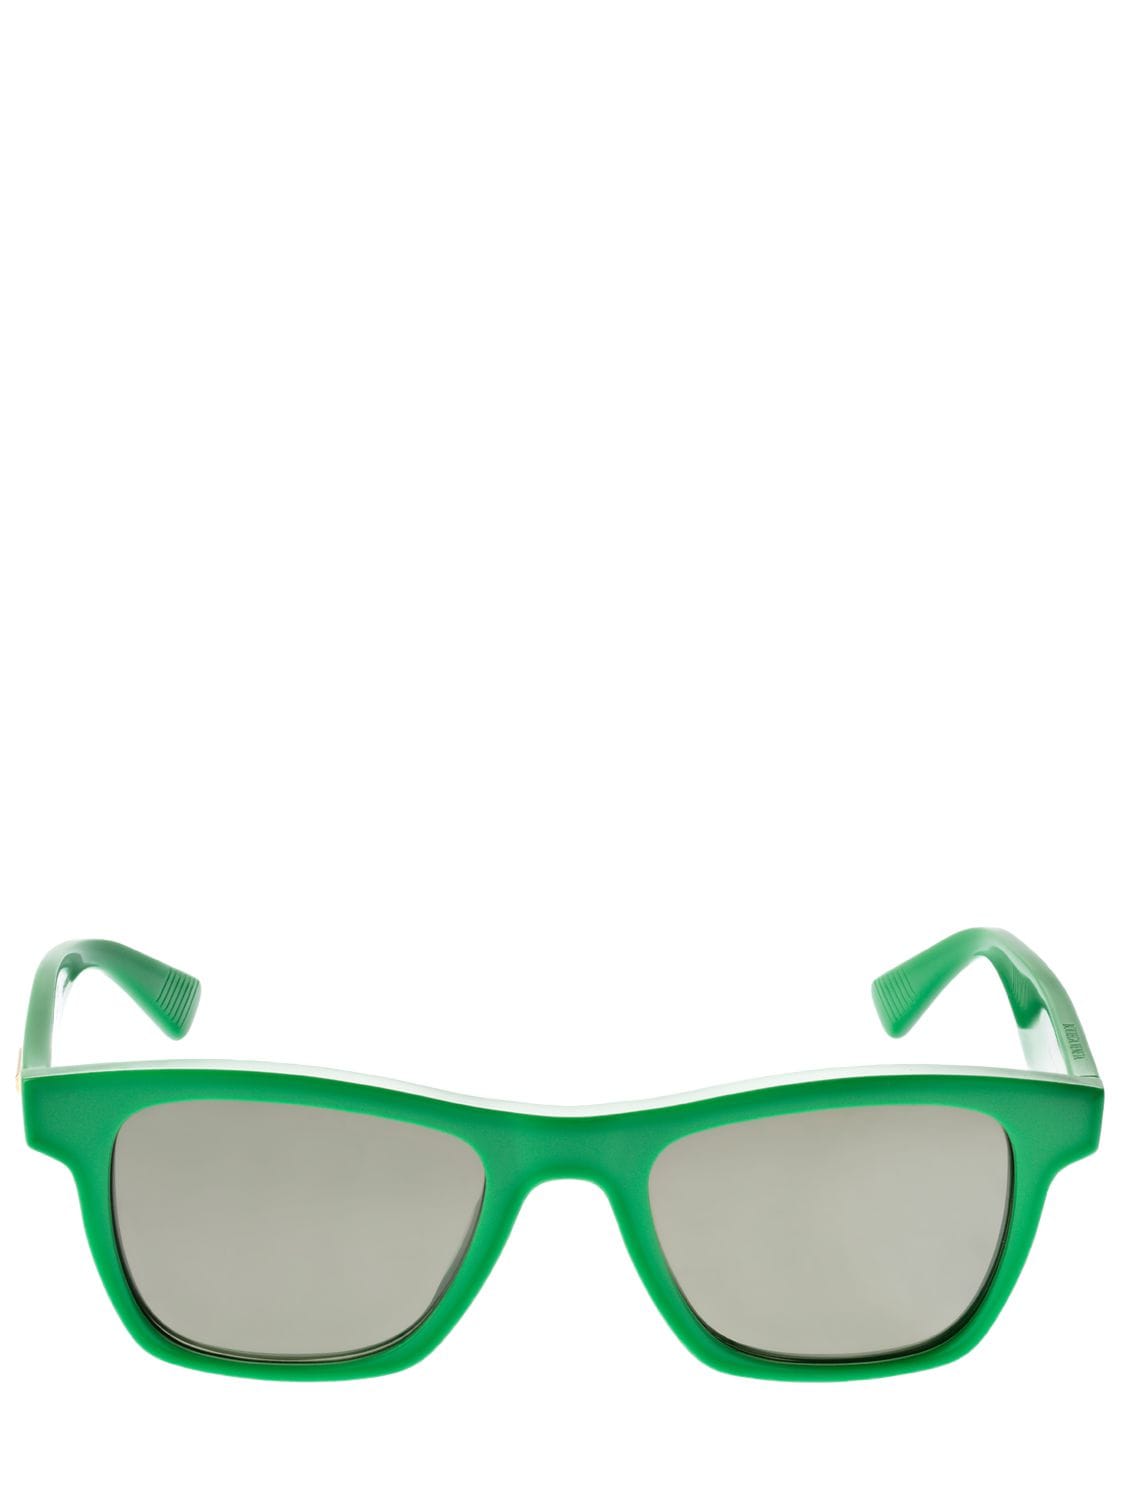 Bottega Veneta Squared Acetate Sunglasses In Green